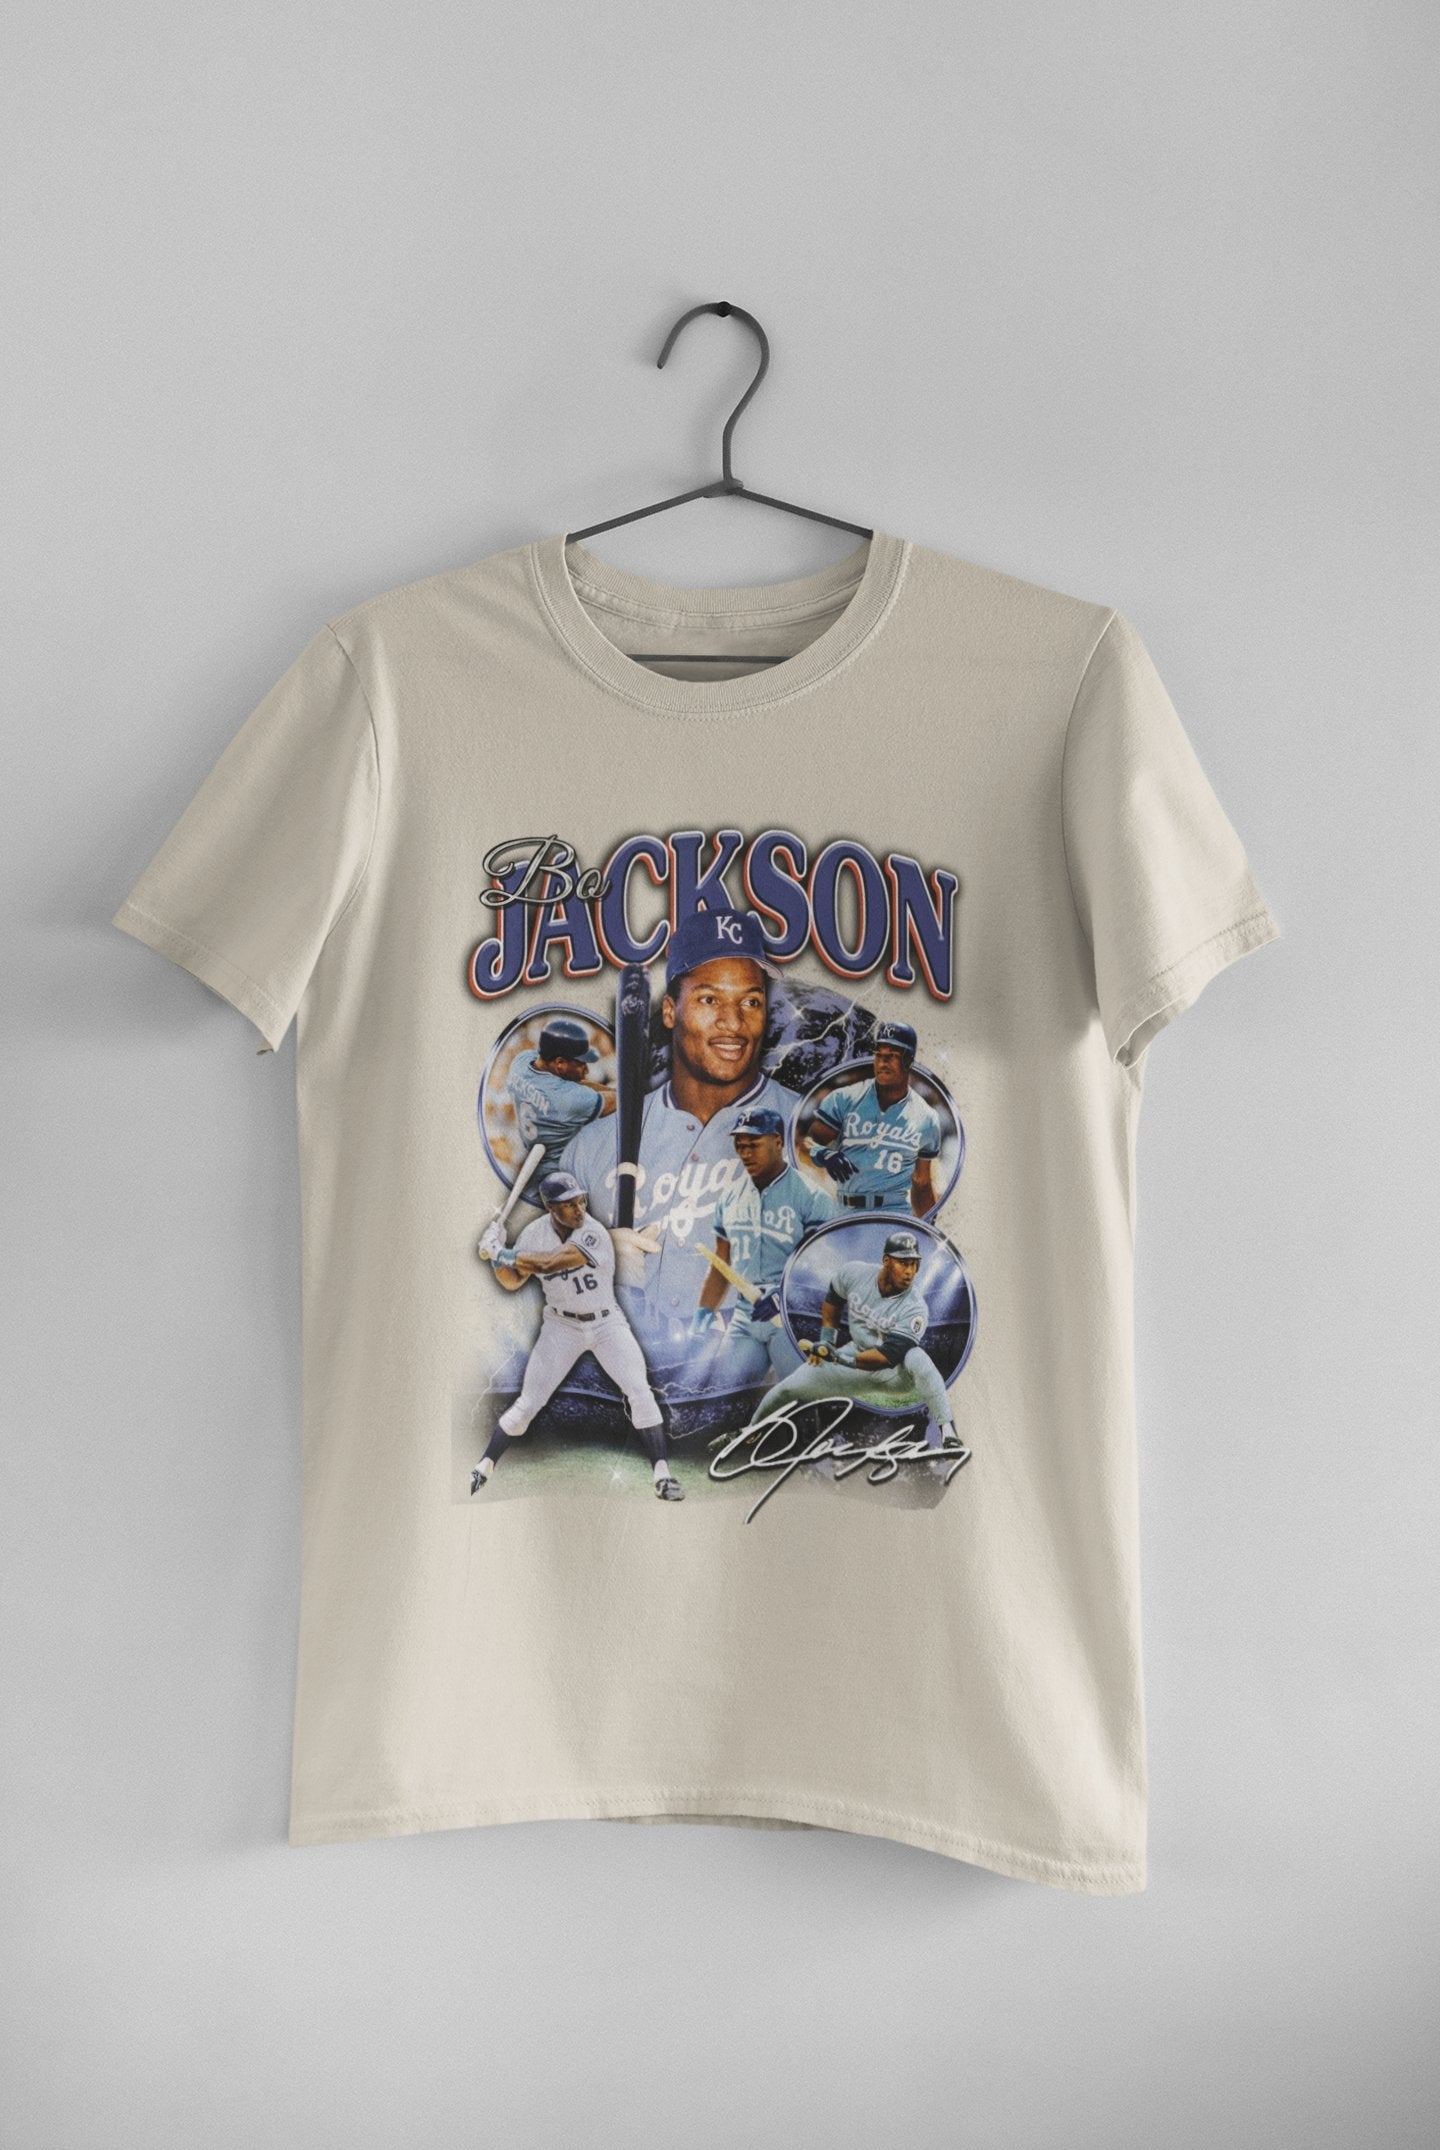 Bo Jackson v2 - Unisex t-shirt - Modern Vintage Apparel